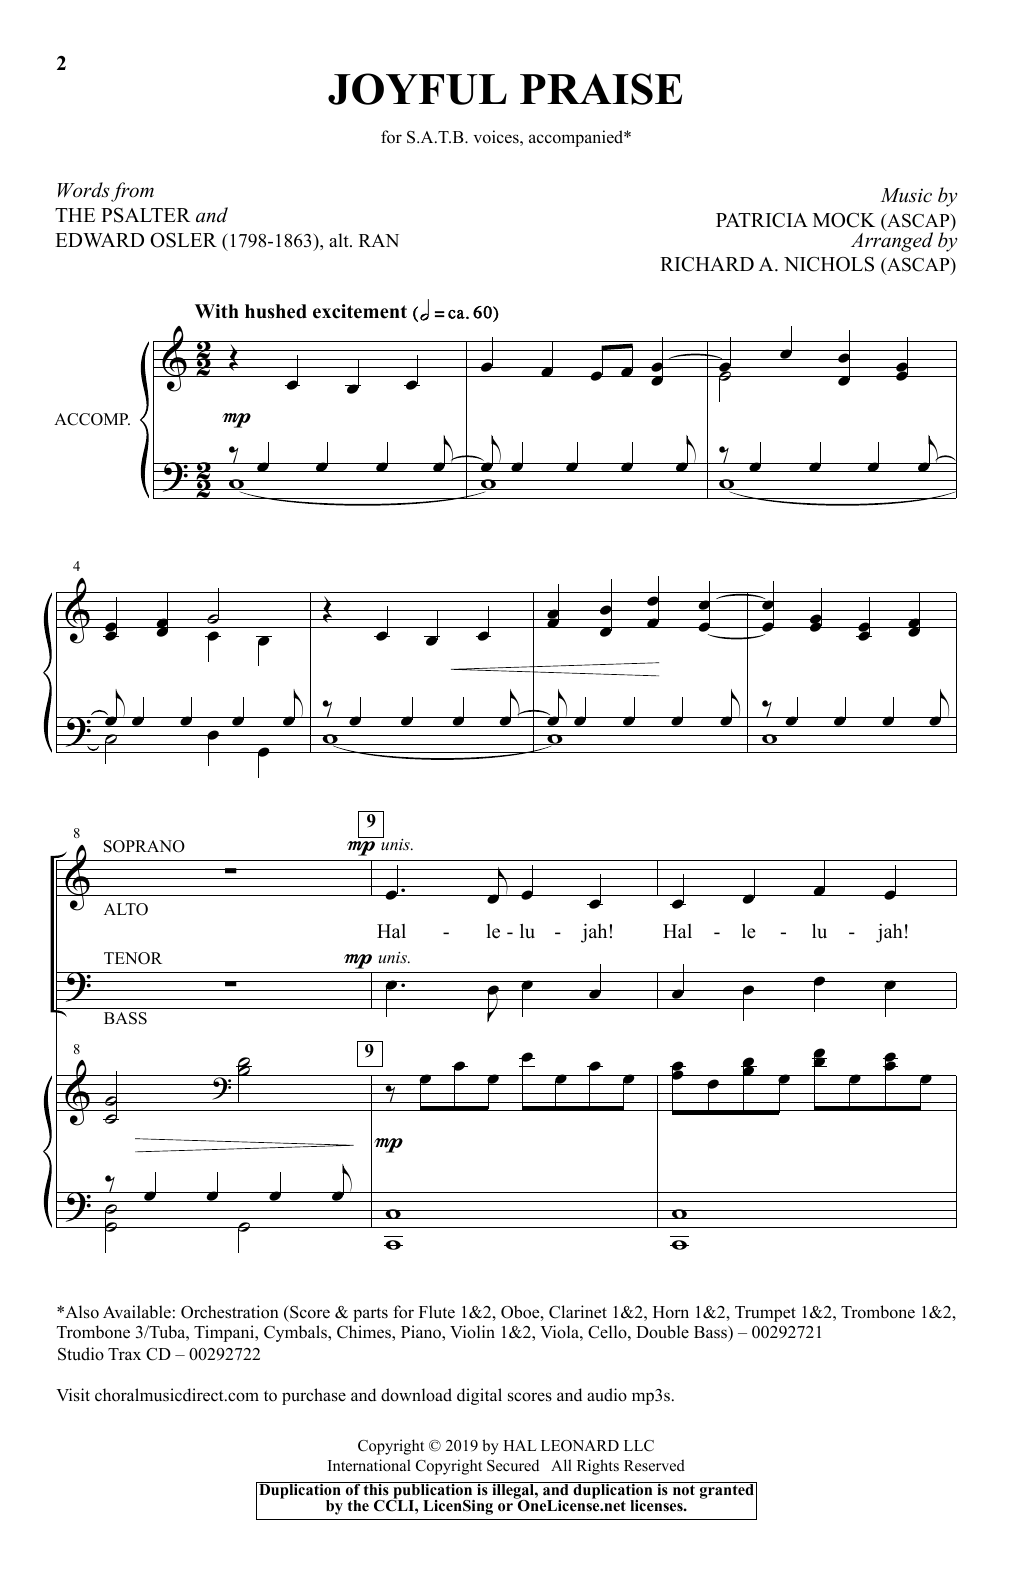 Richard A. Nichols Joyful Praise Sheet Music Notes & Chords for SATB Choir - Download or Print PDF